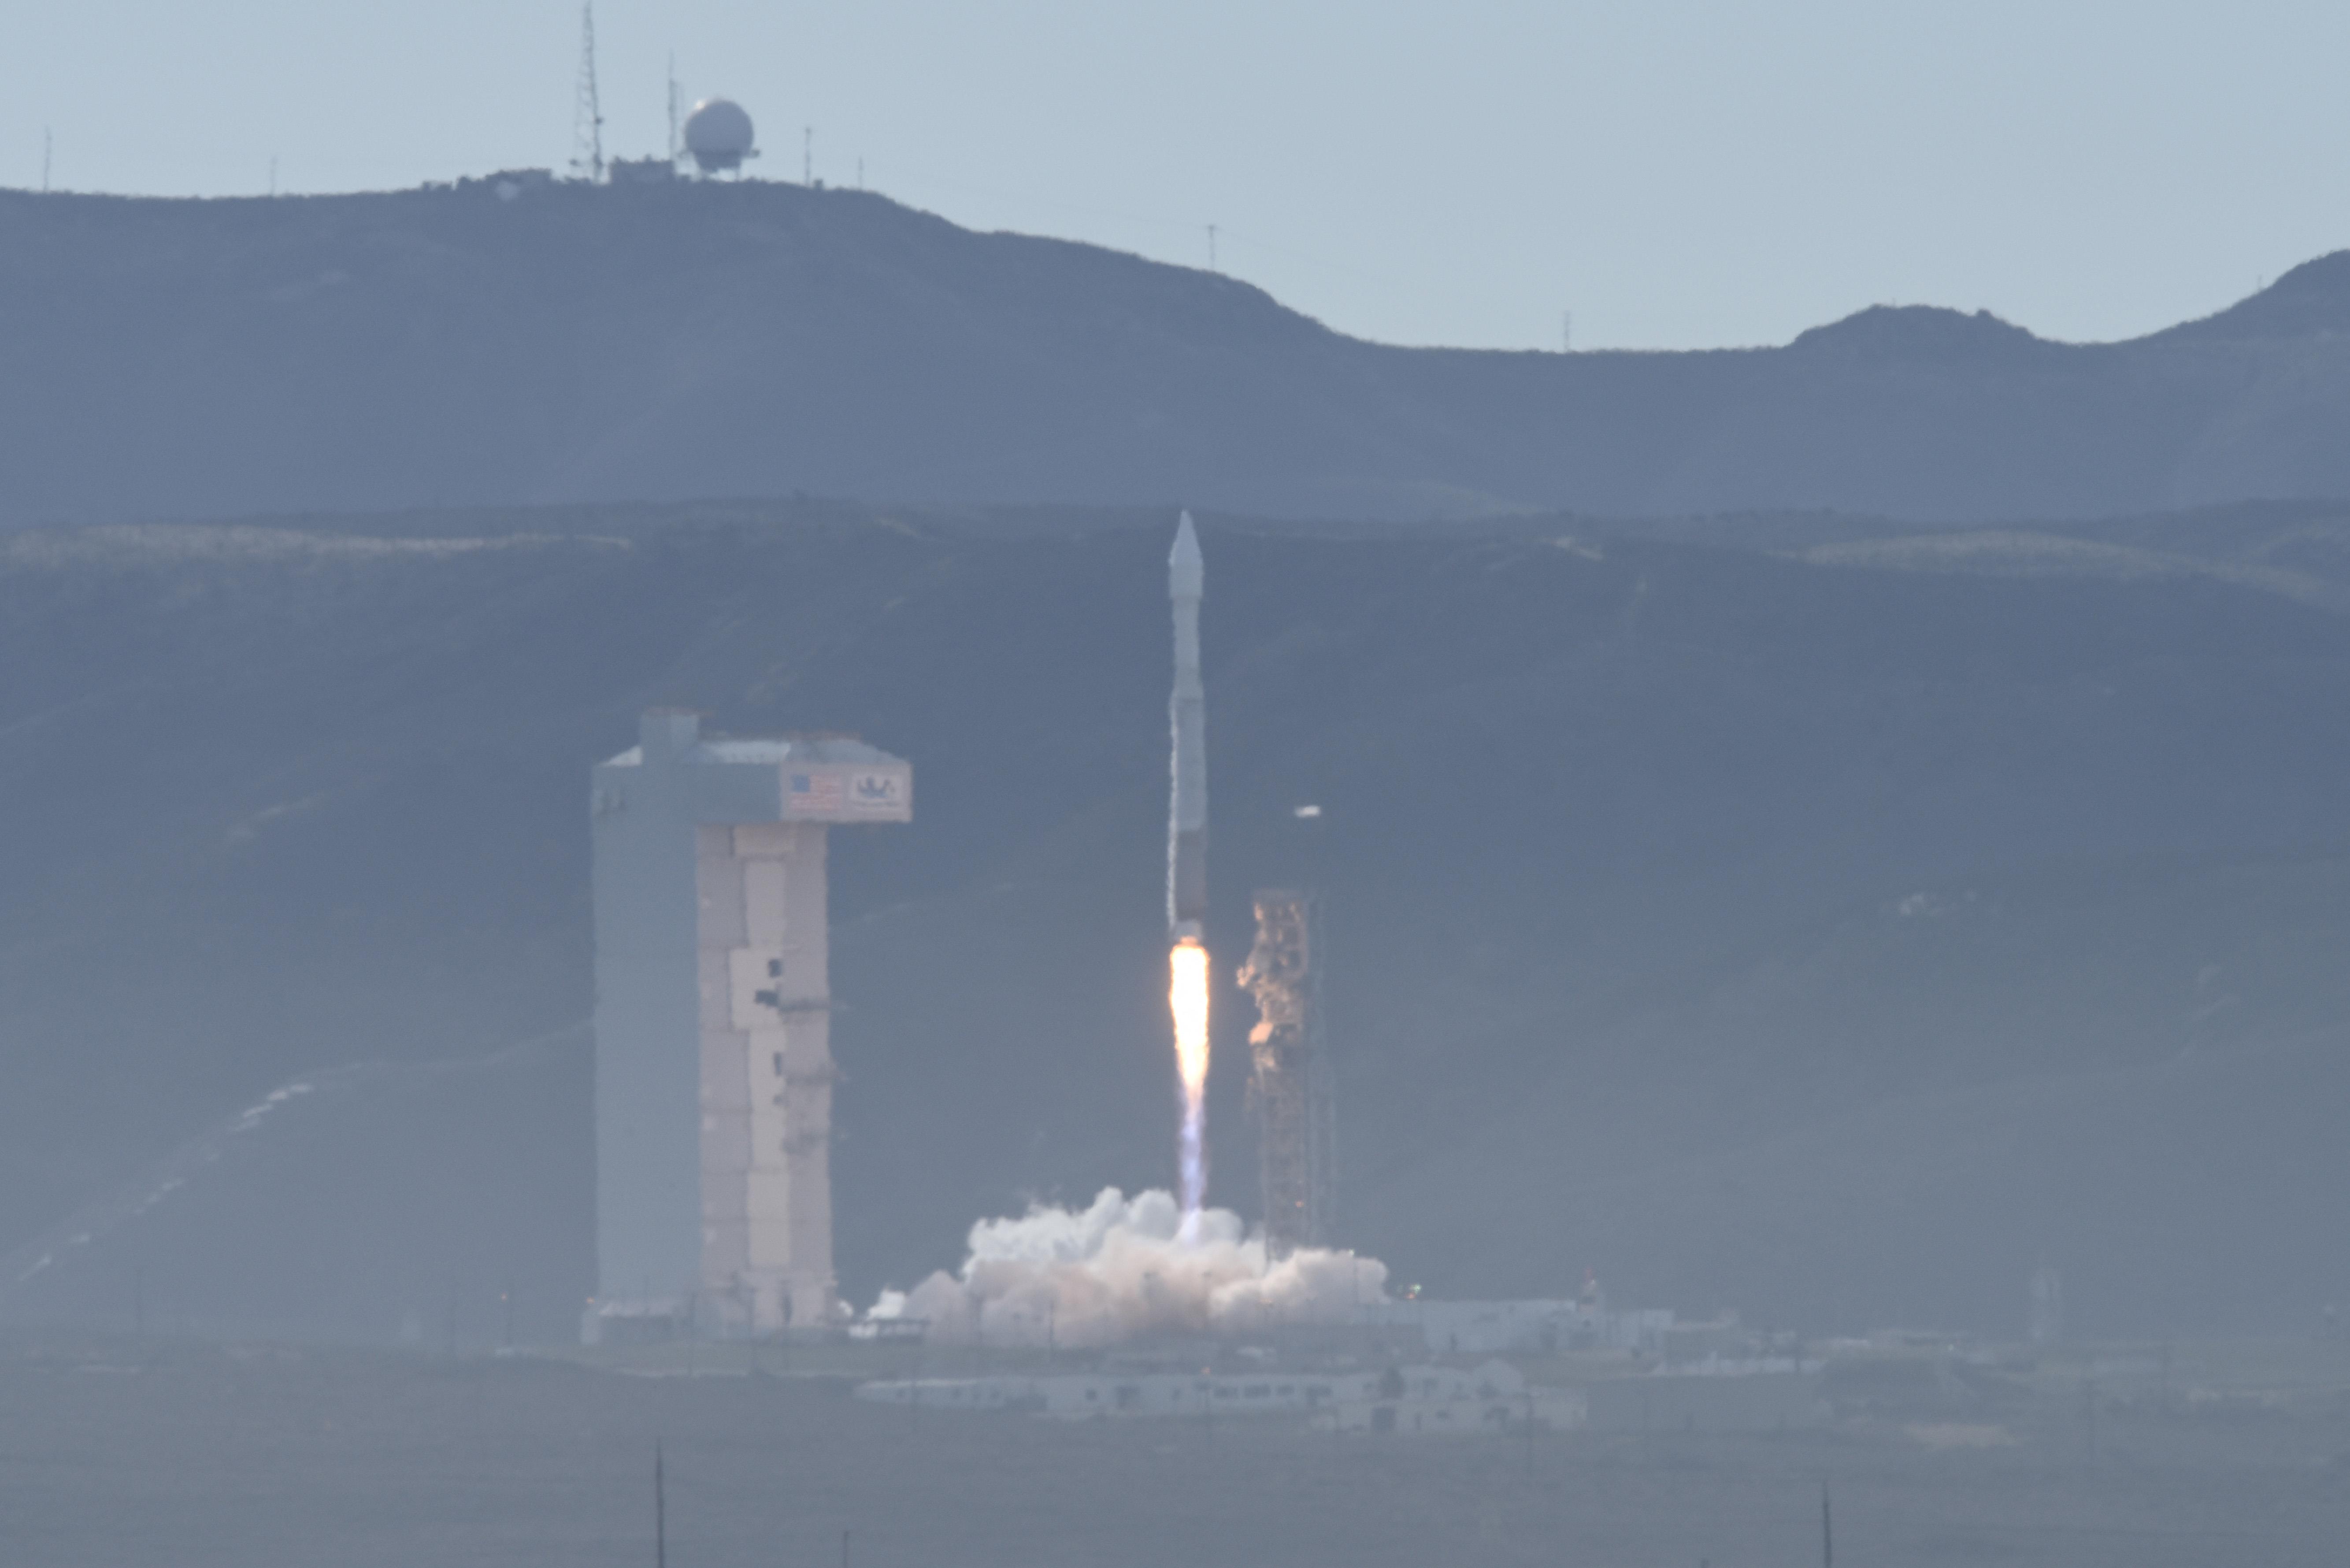 Minuteman III launch scheduled for Aug. 2